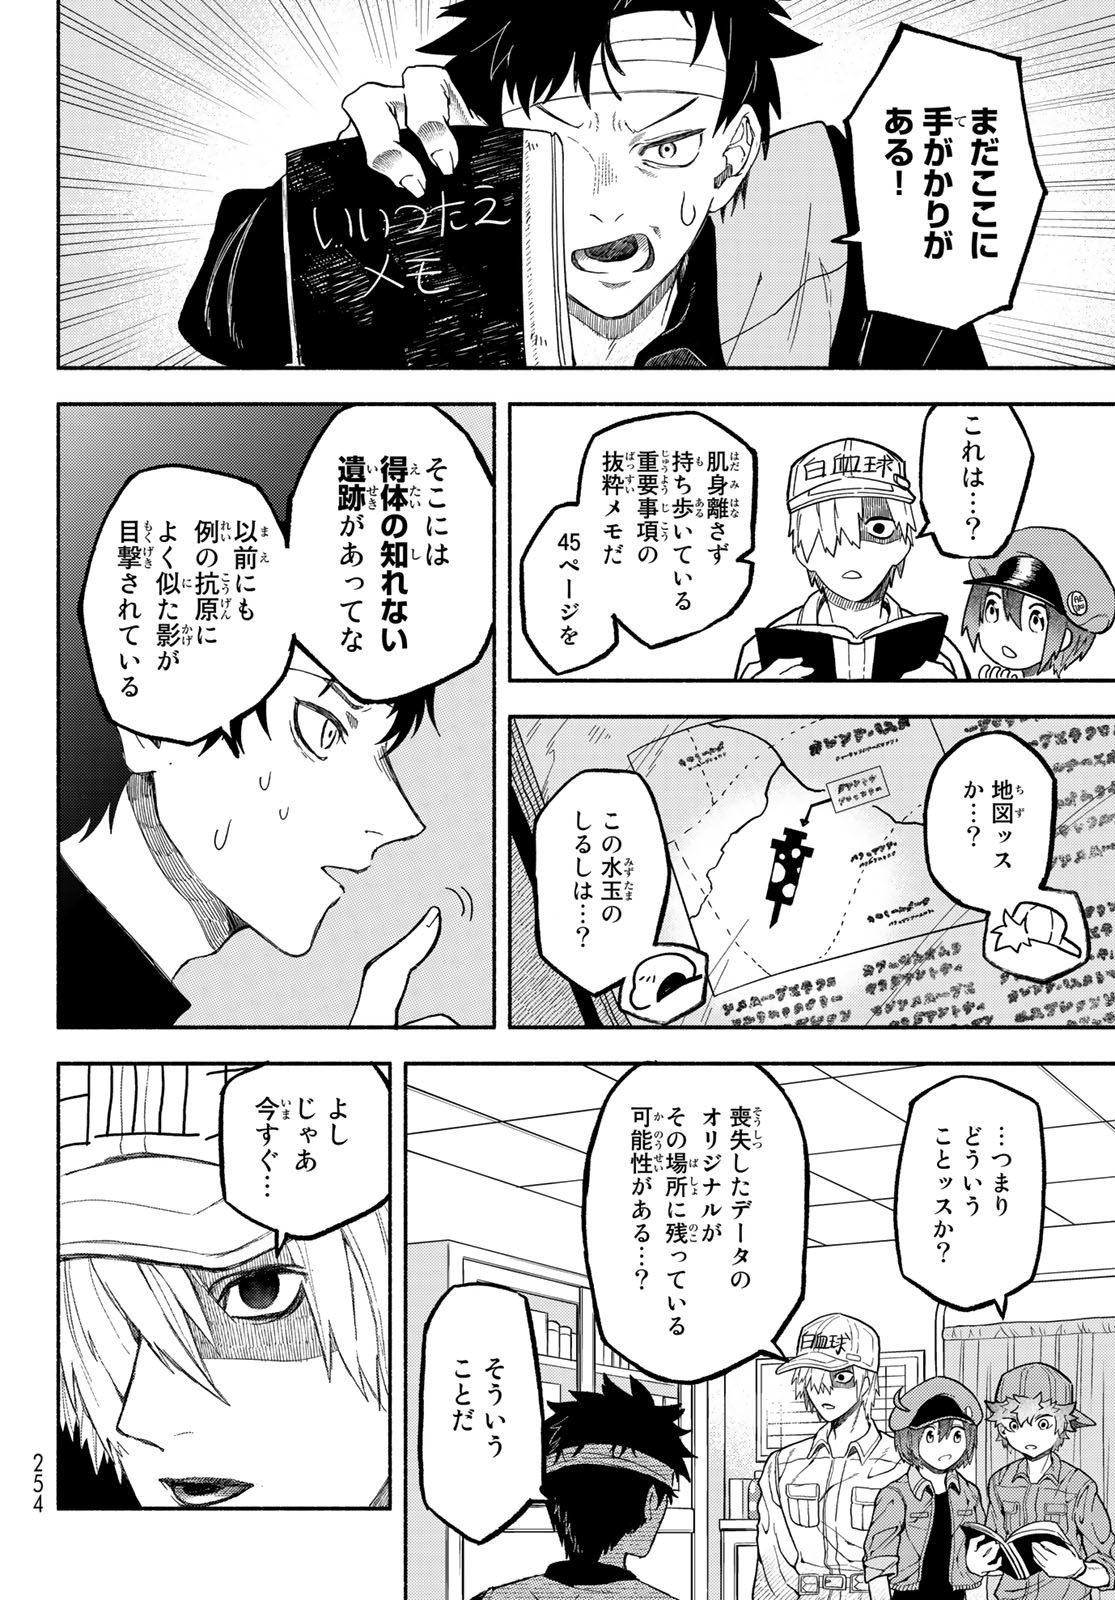 Hataraku Saibou Okusuri - Chapter 2 - Page 12